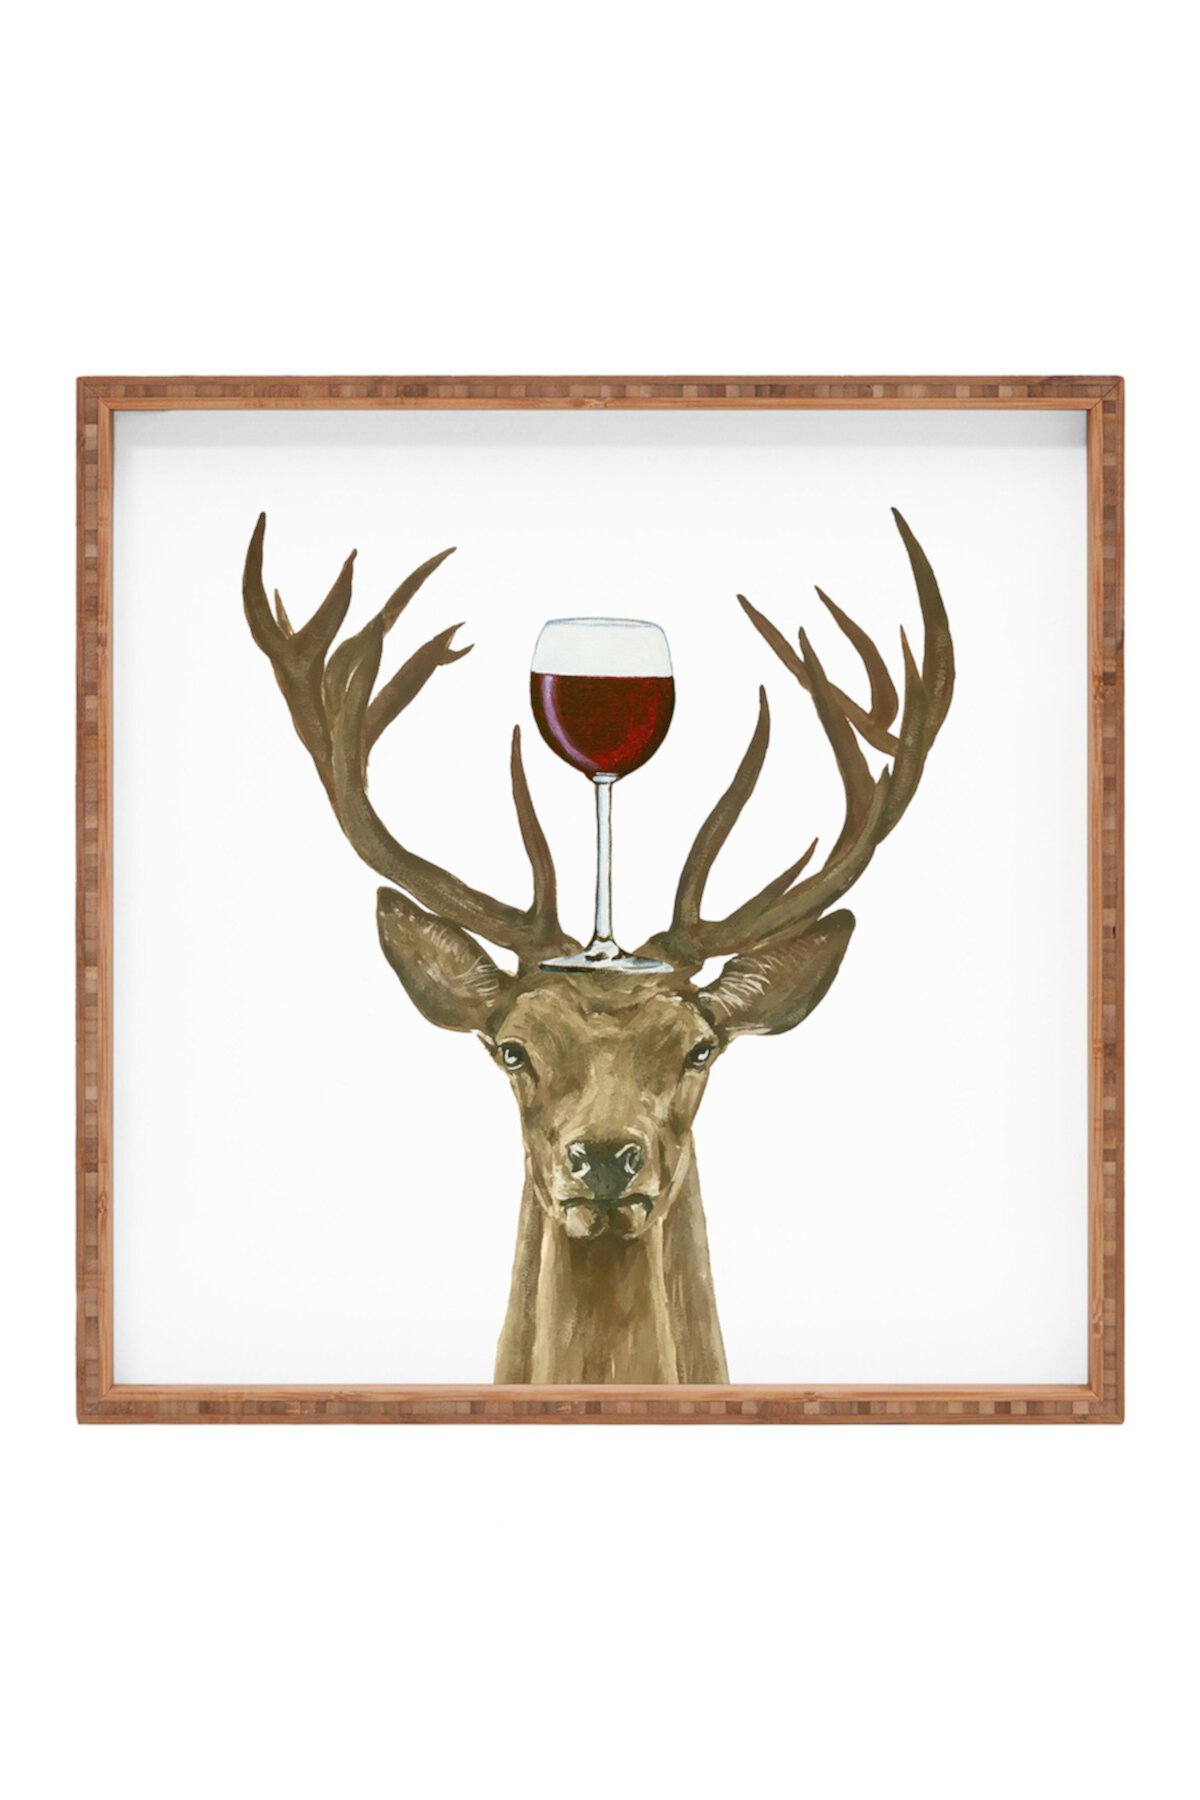 Coco de Paris Deer with Wineglass Square Tray Deny Designs